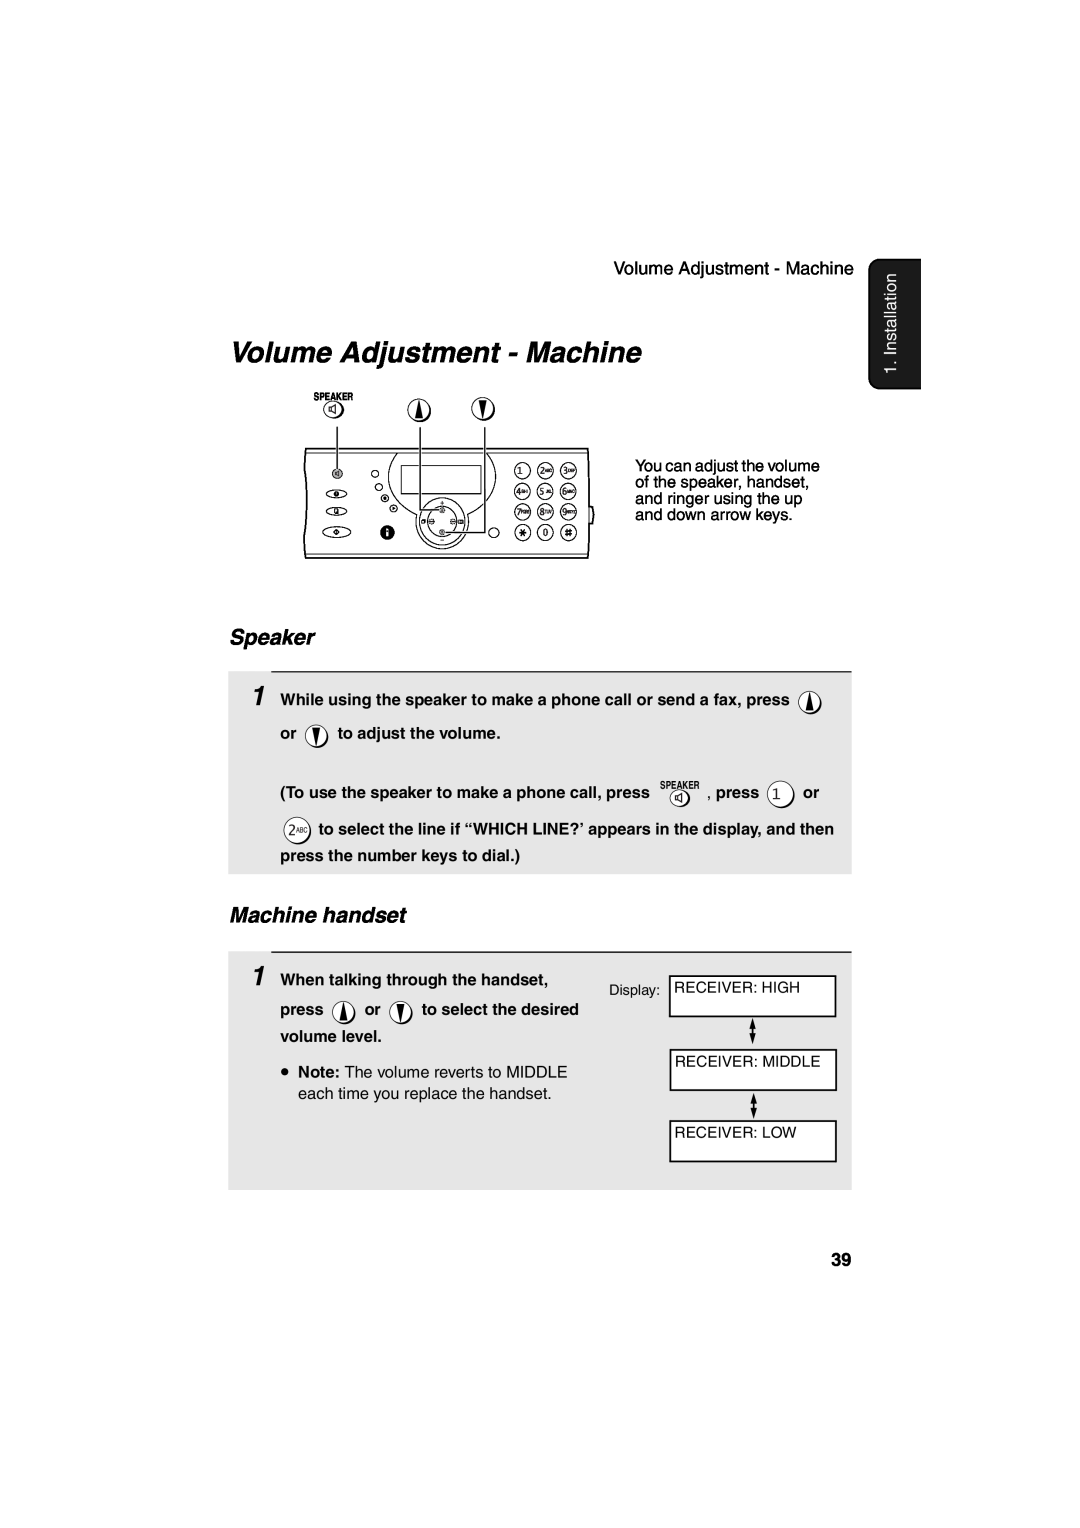 Sharp UX-CD600 operation manual Volume Adjustment - Machine, Speaker, Machine handset, Installation 